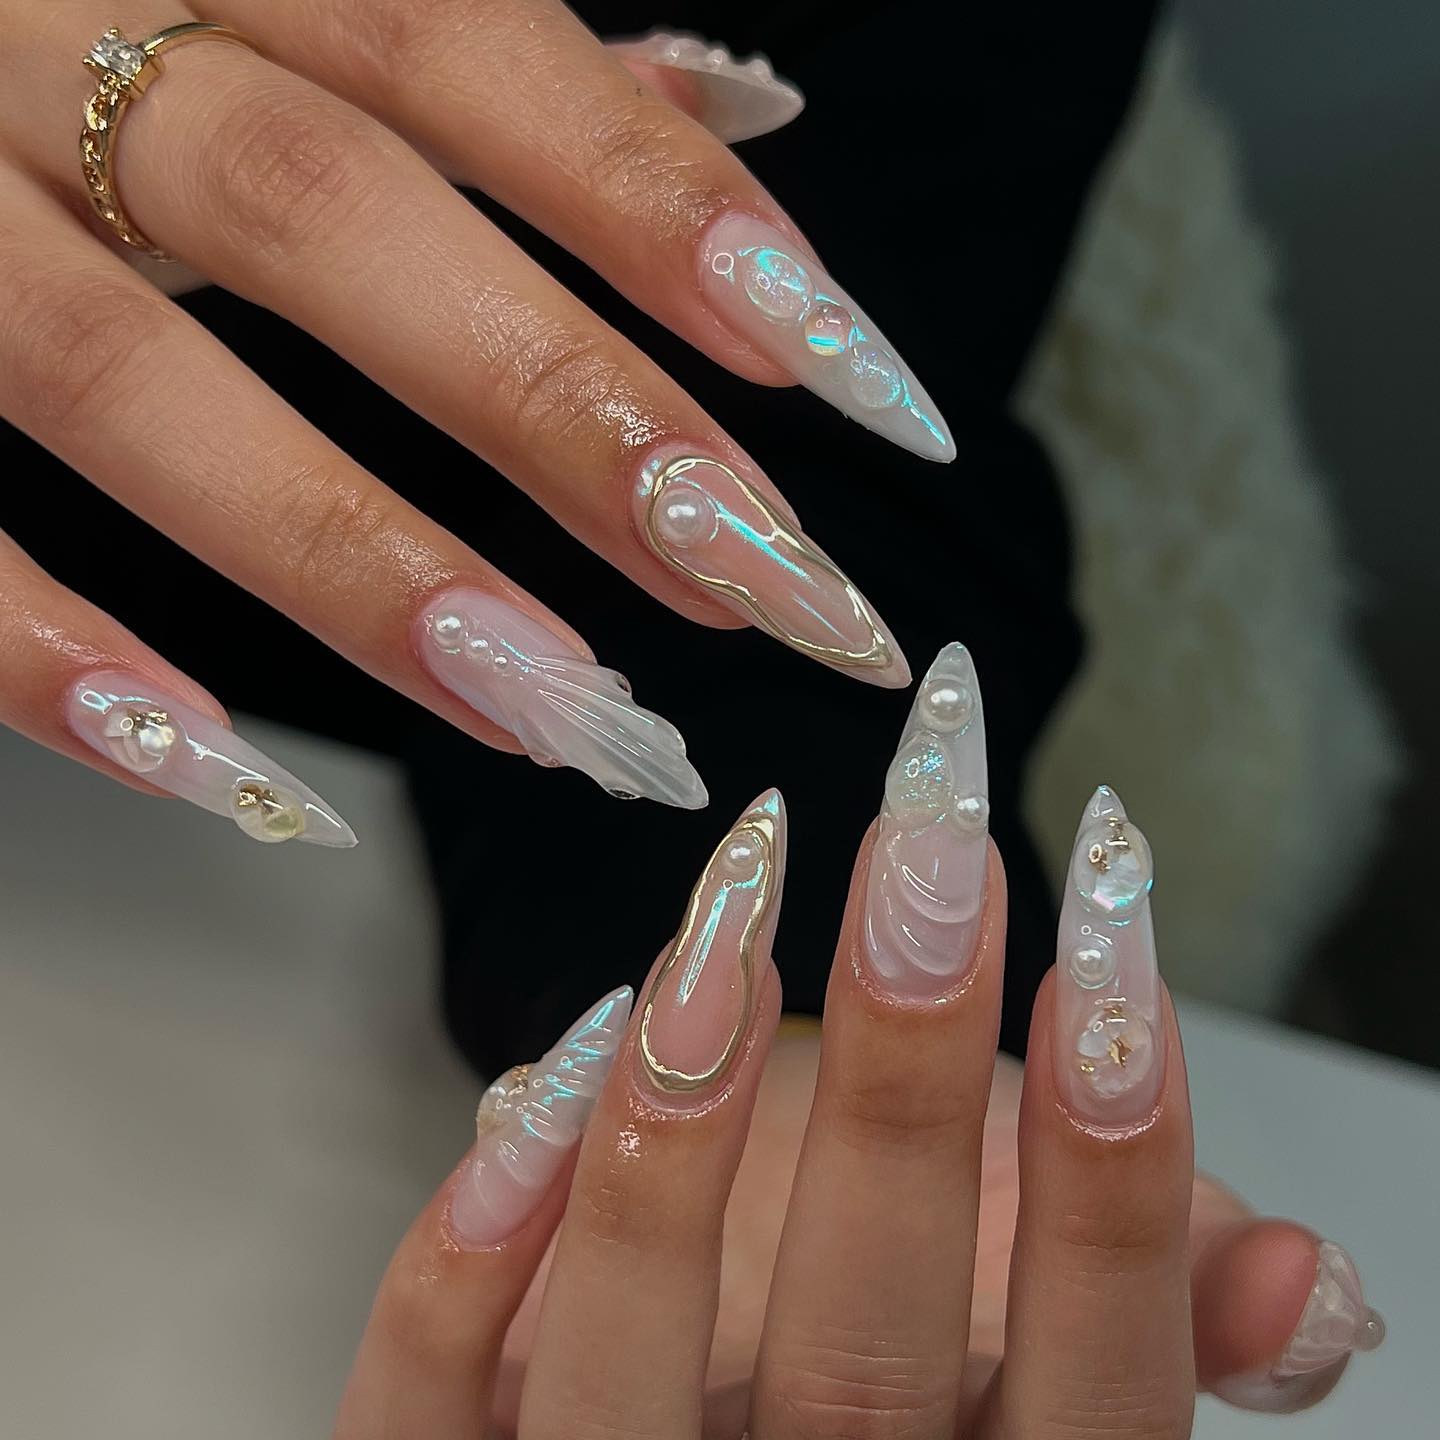 mermaid nails Iridescent shimmer